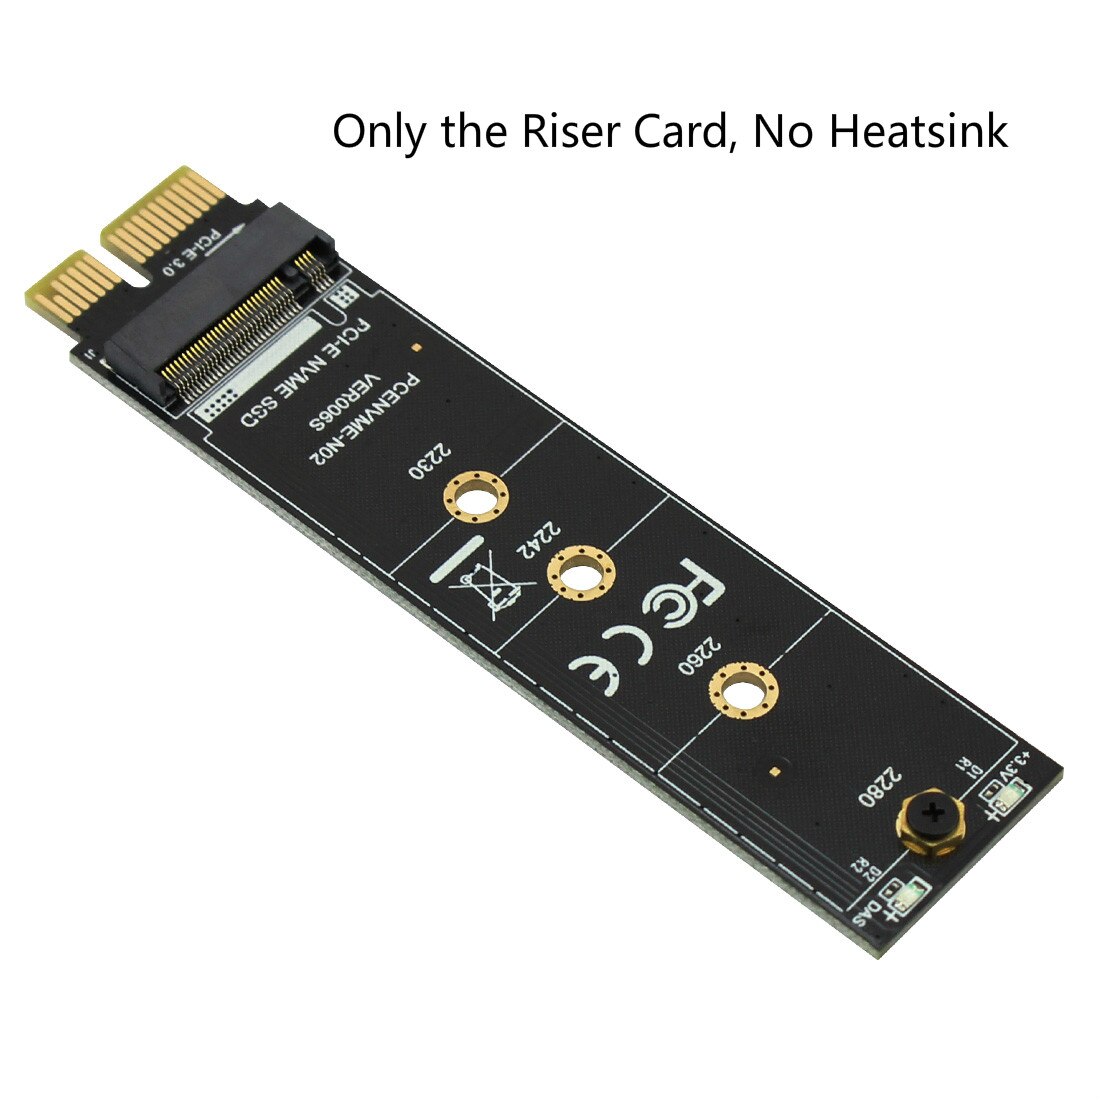 PCI-E PCI Express 3.0 X1 to M.2 M KEY Interface for NVMe SSD M.2 Riser Card Adapter Heatsink SSD 2230 2242 2260 2280 Full Speed: Blue